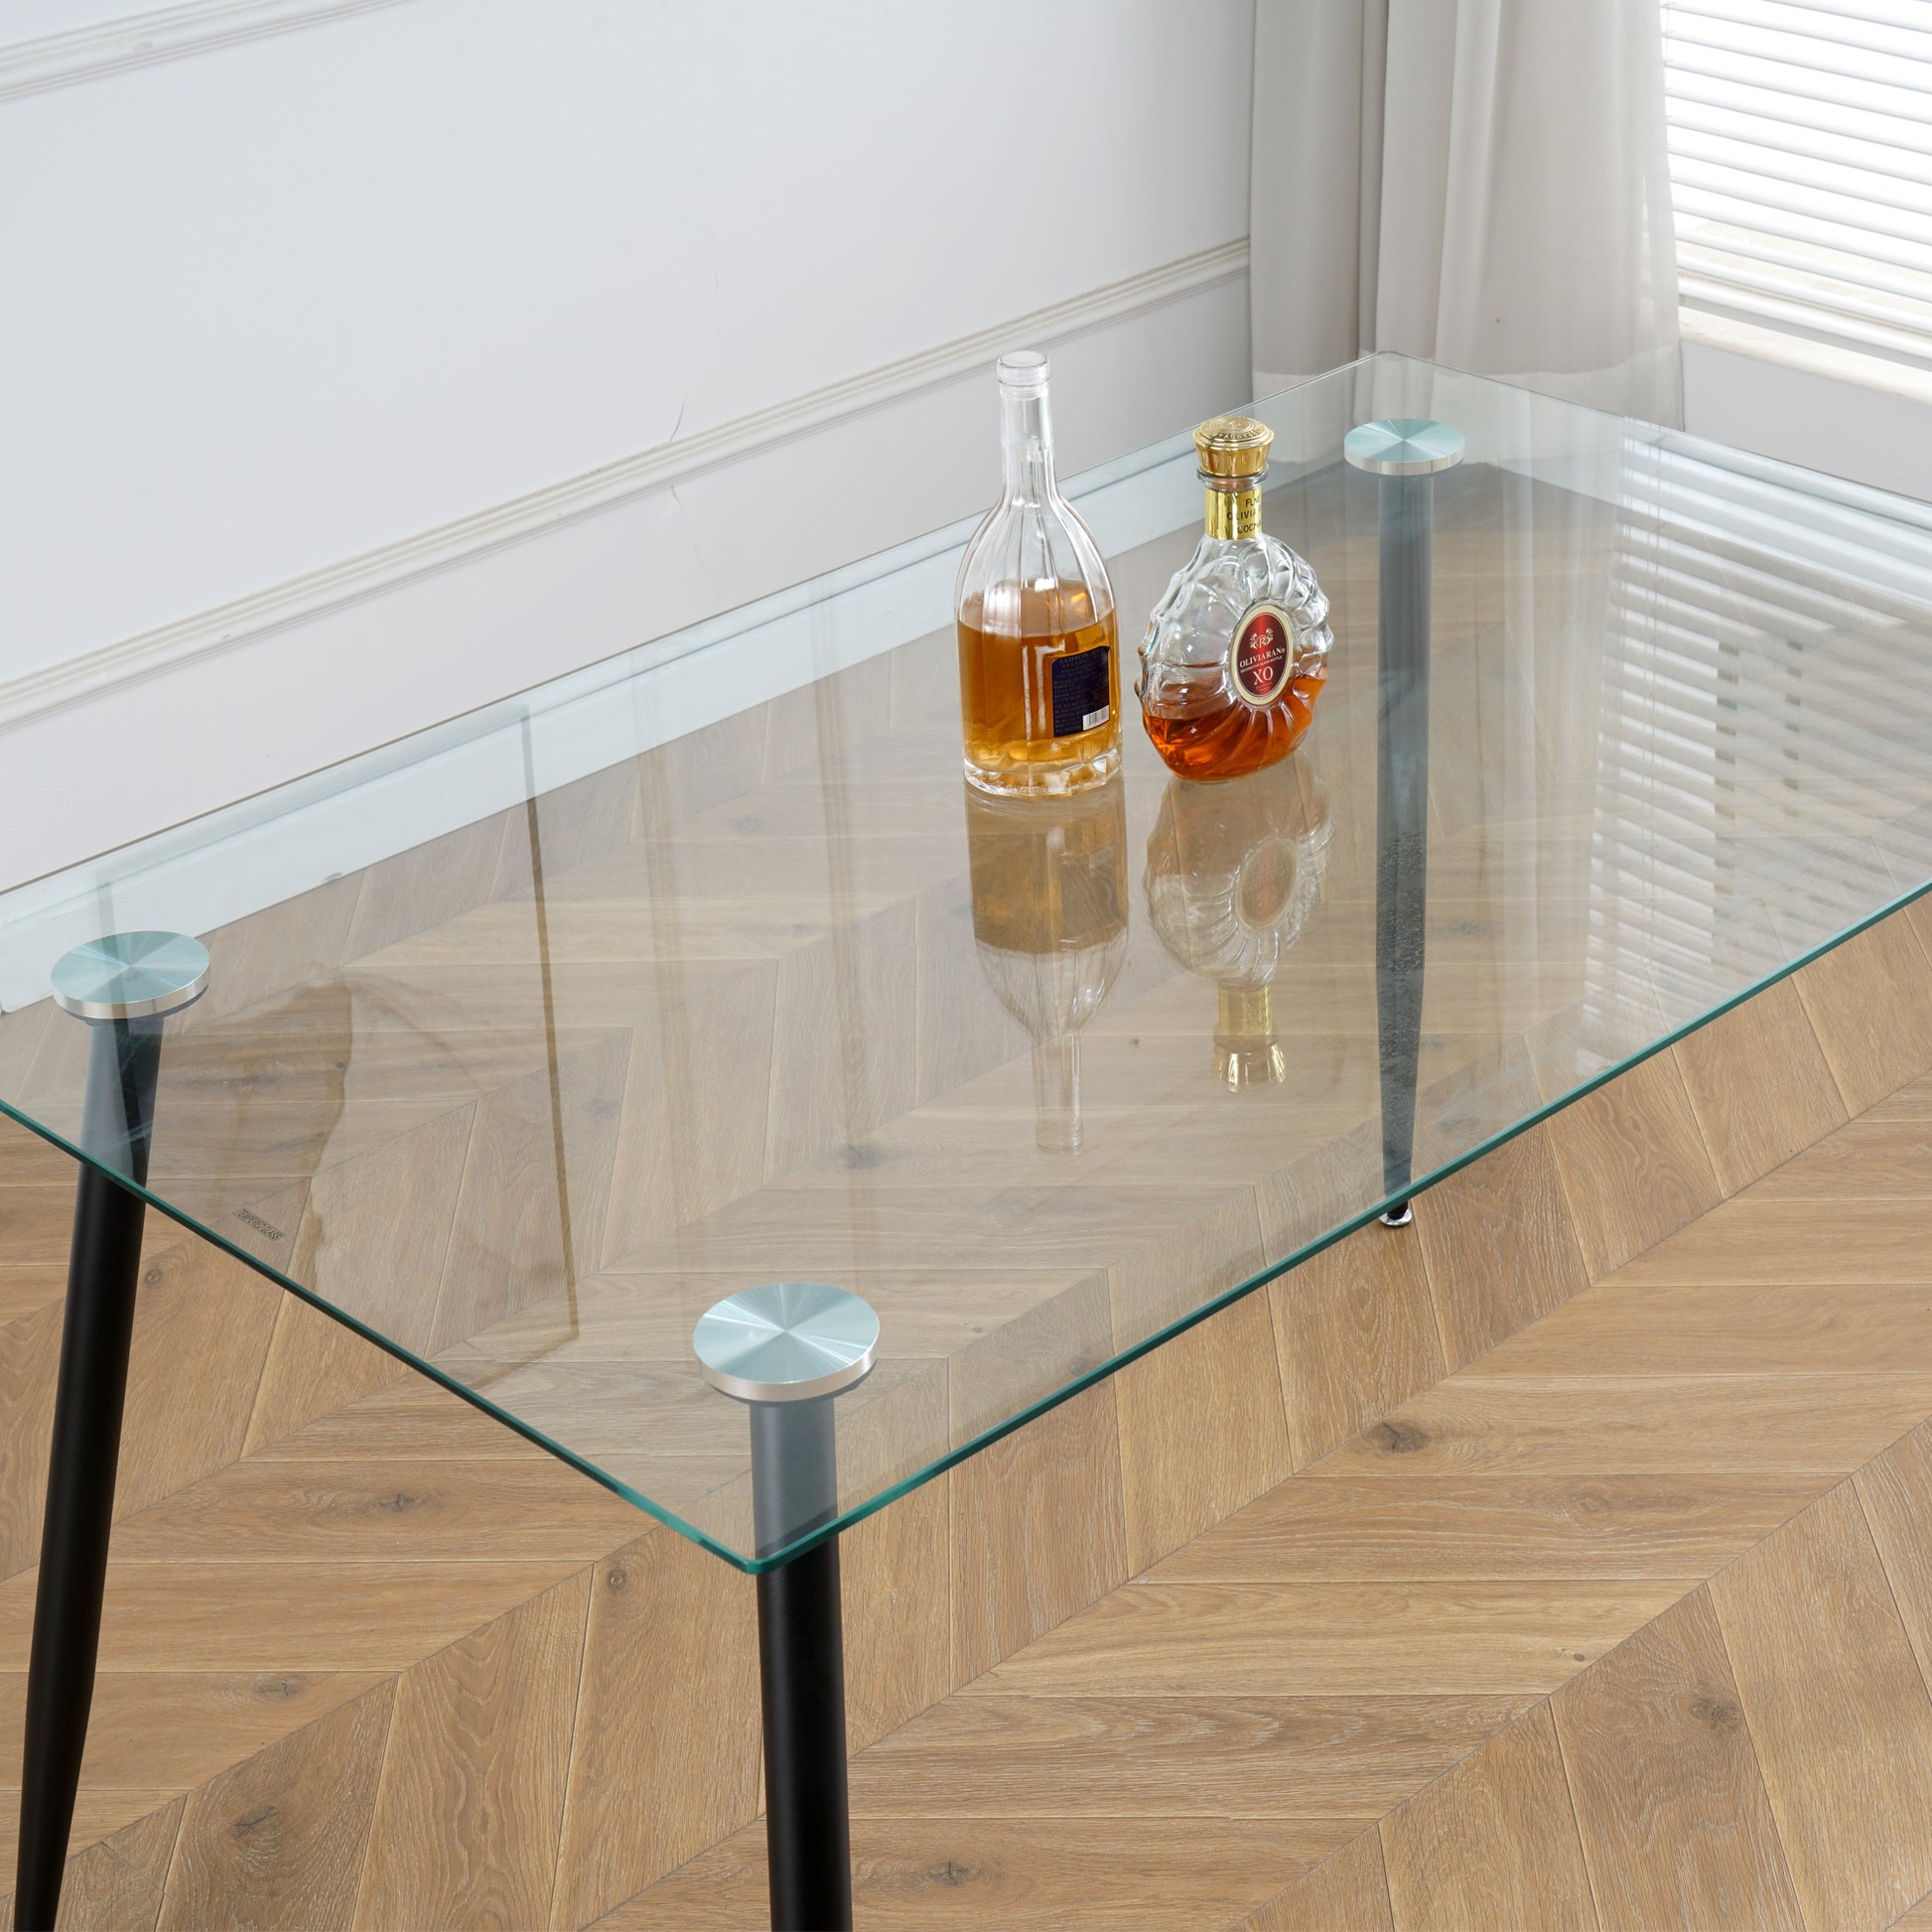 Modern Kitchen Glass dining table 51" Rectangular black-rectangular-glass